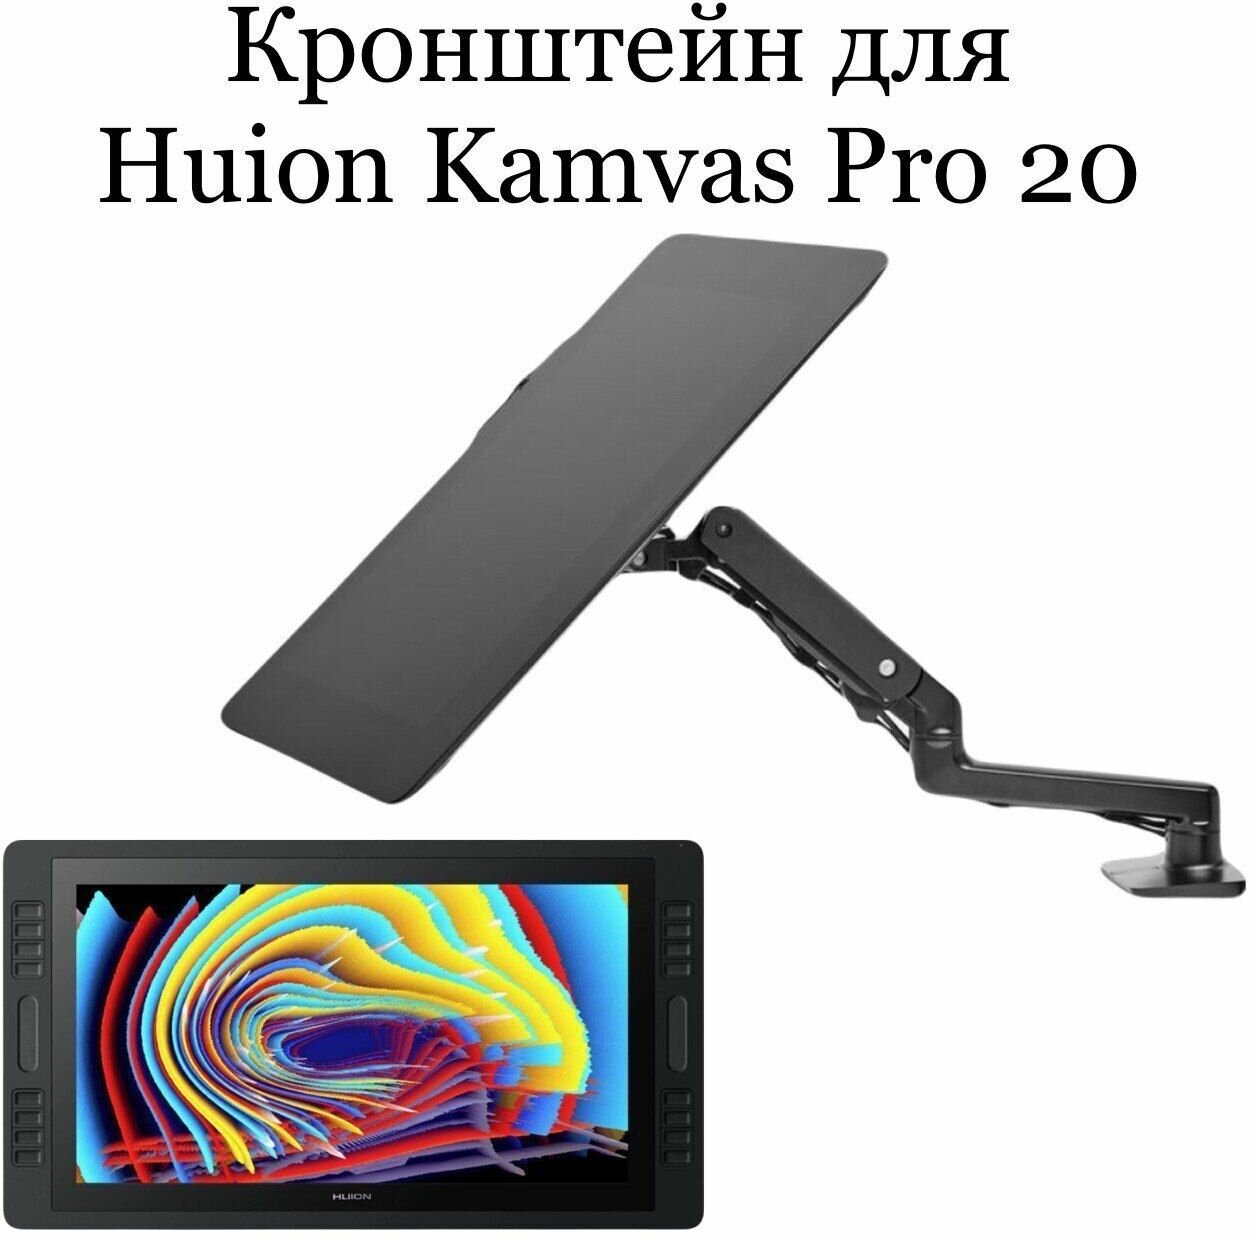 Кронштейн для HUION Kamvas Pro 20